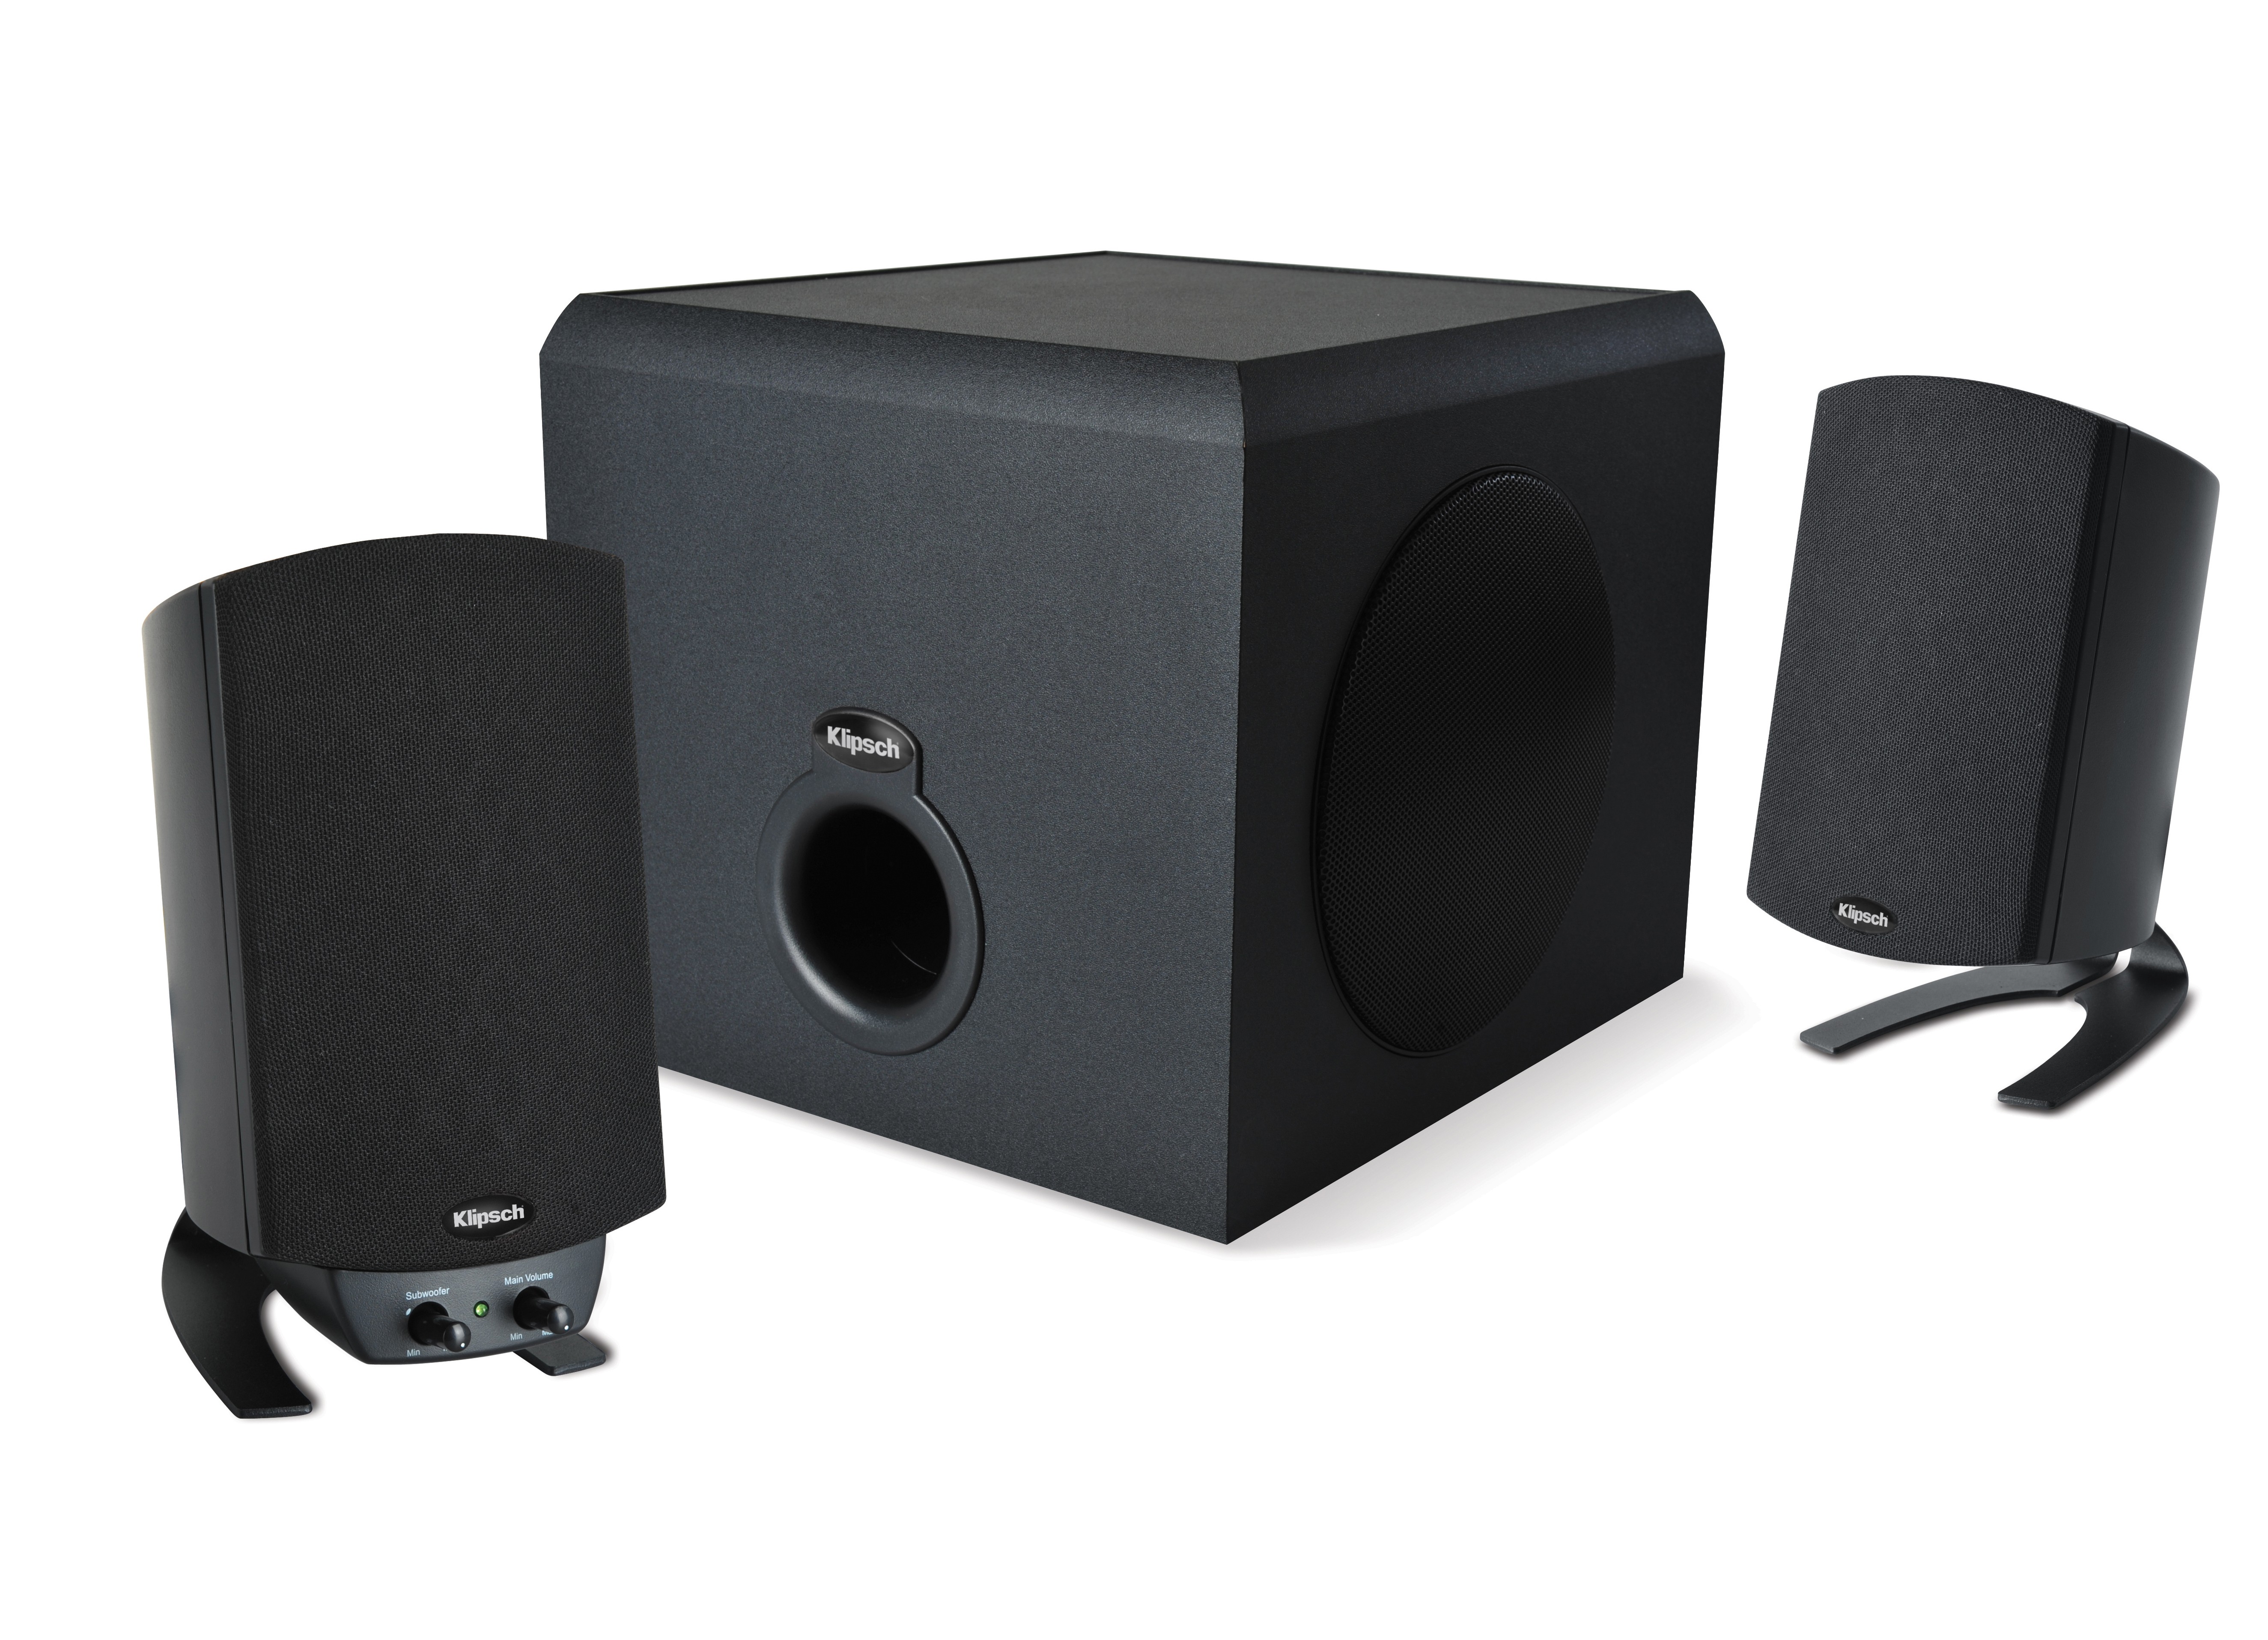 Klipsch Promedia 2.1 speaker system